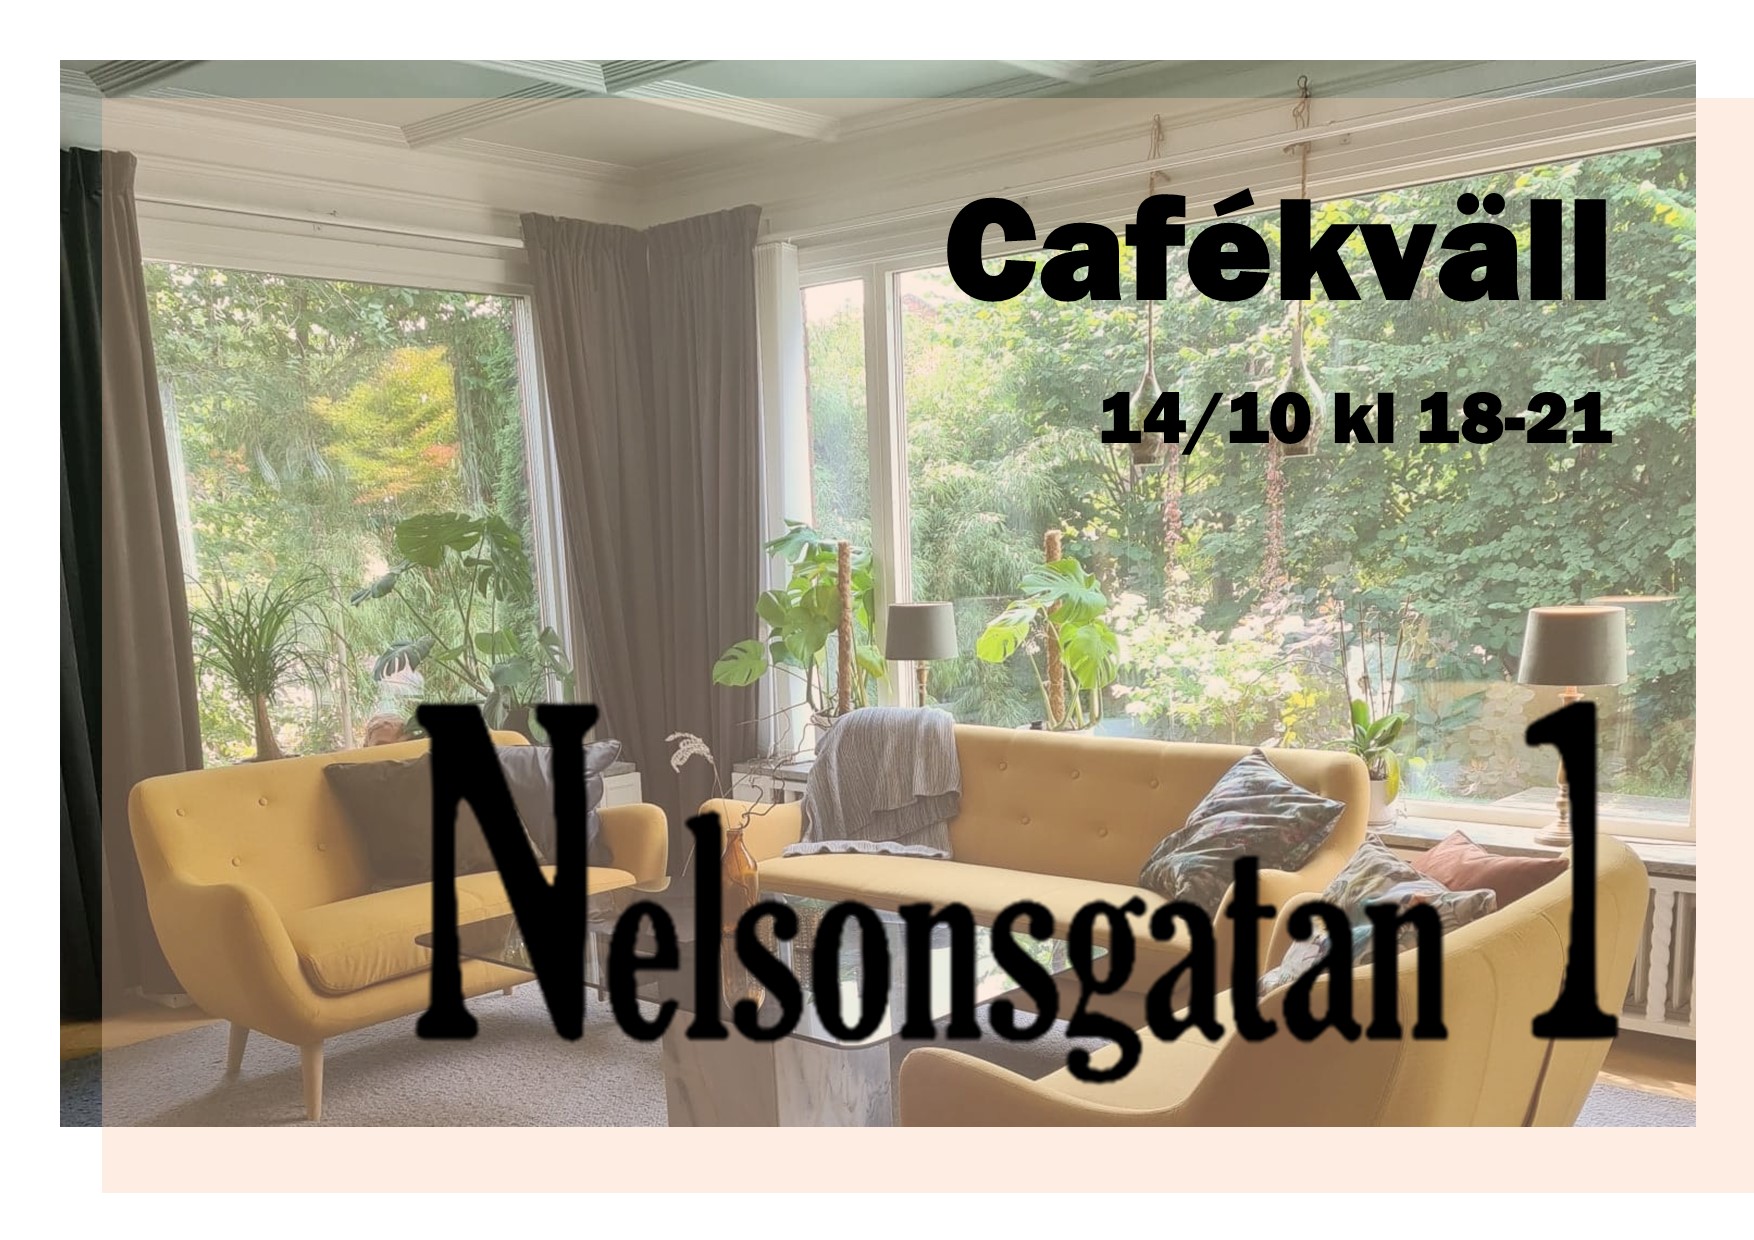 Cafékväll på Nelsonsgatan 1 14/10 kl 18-21